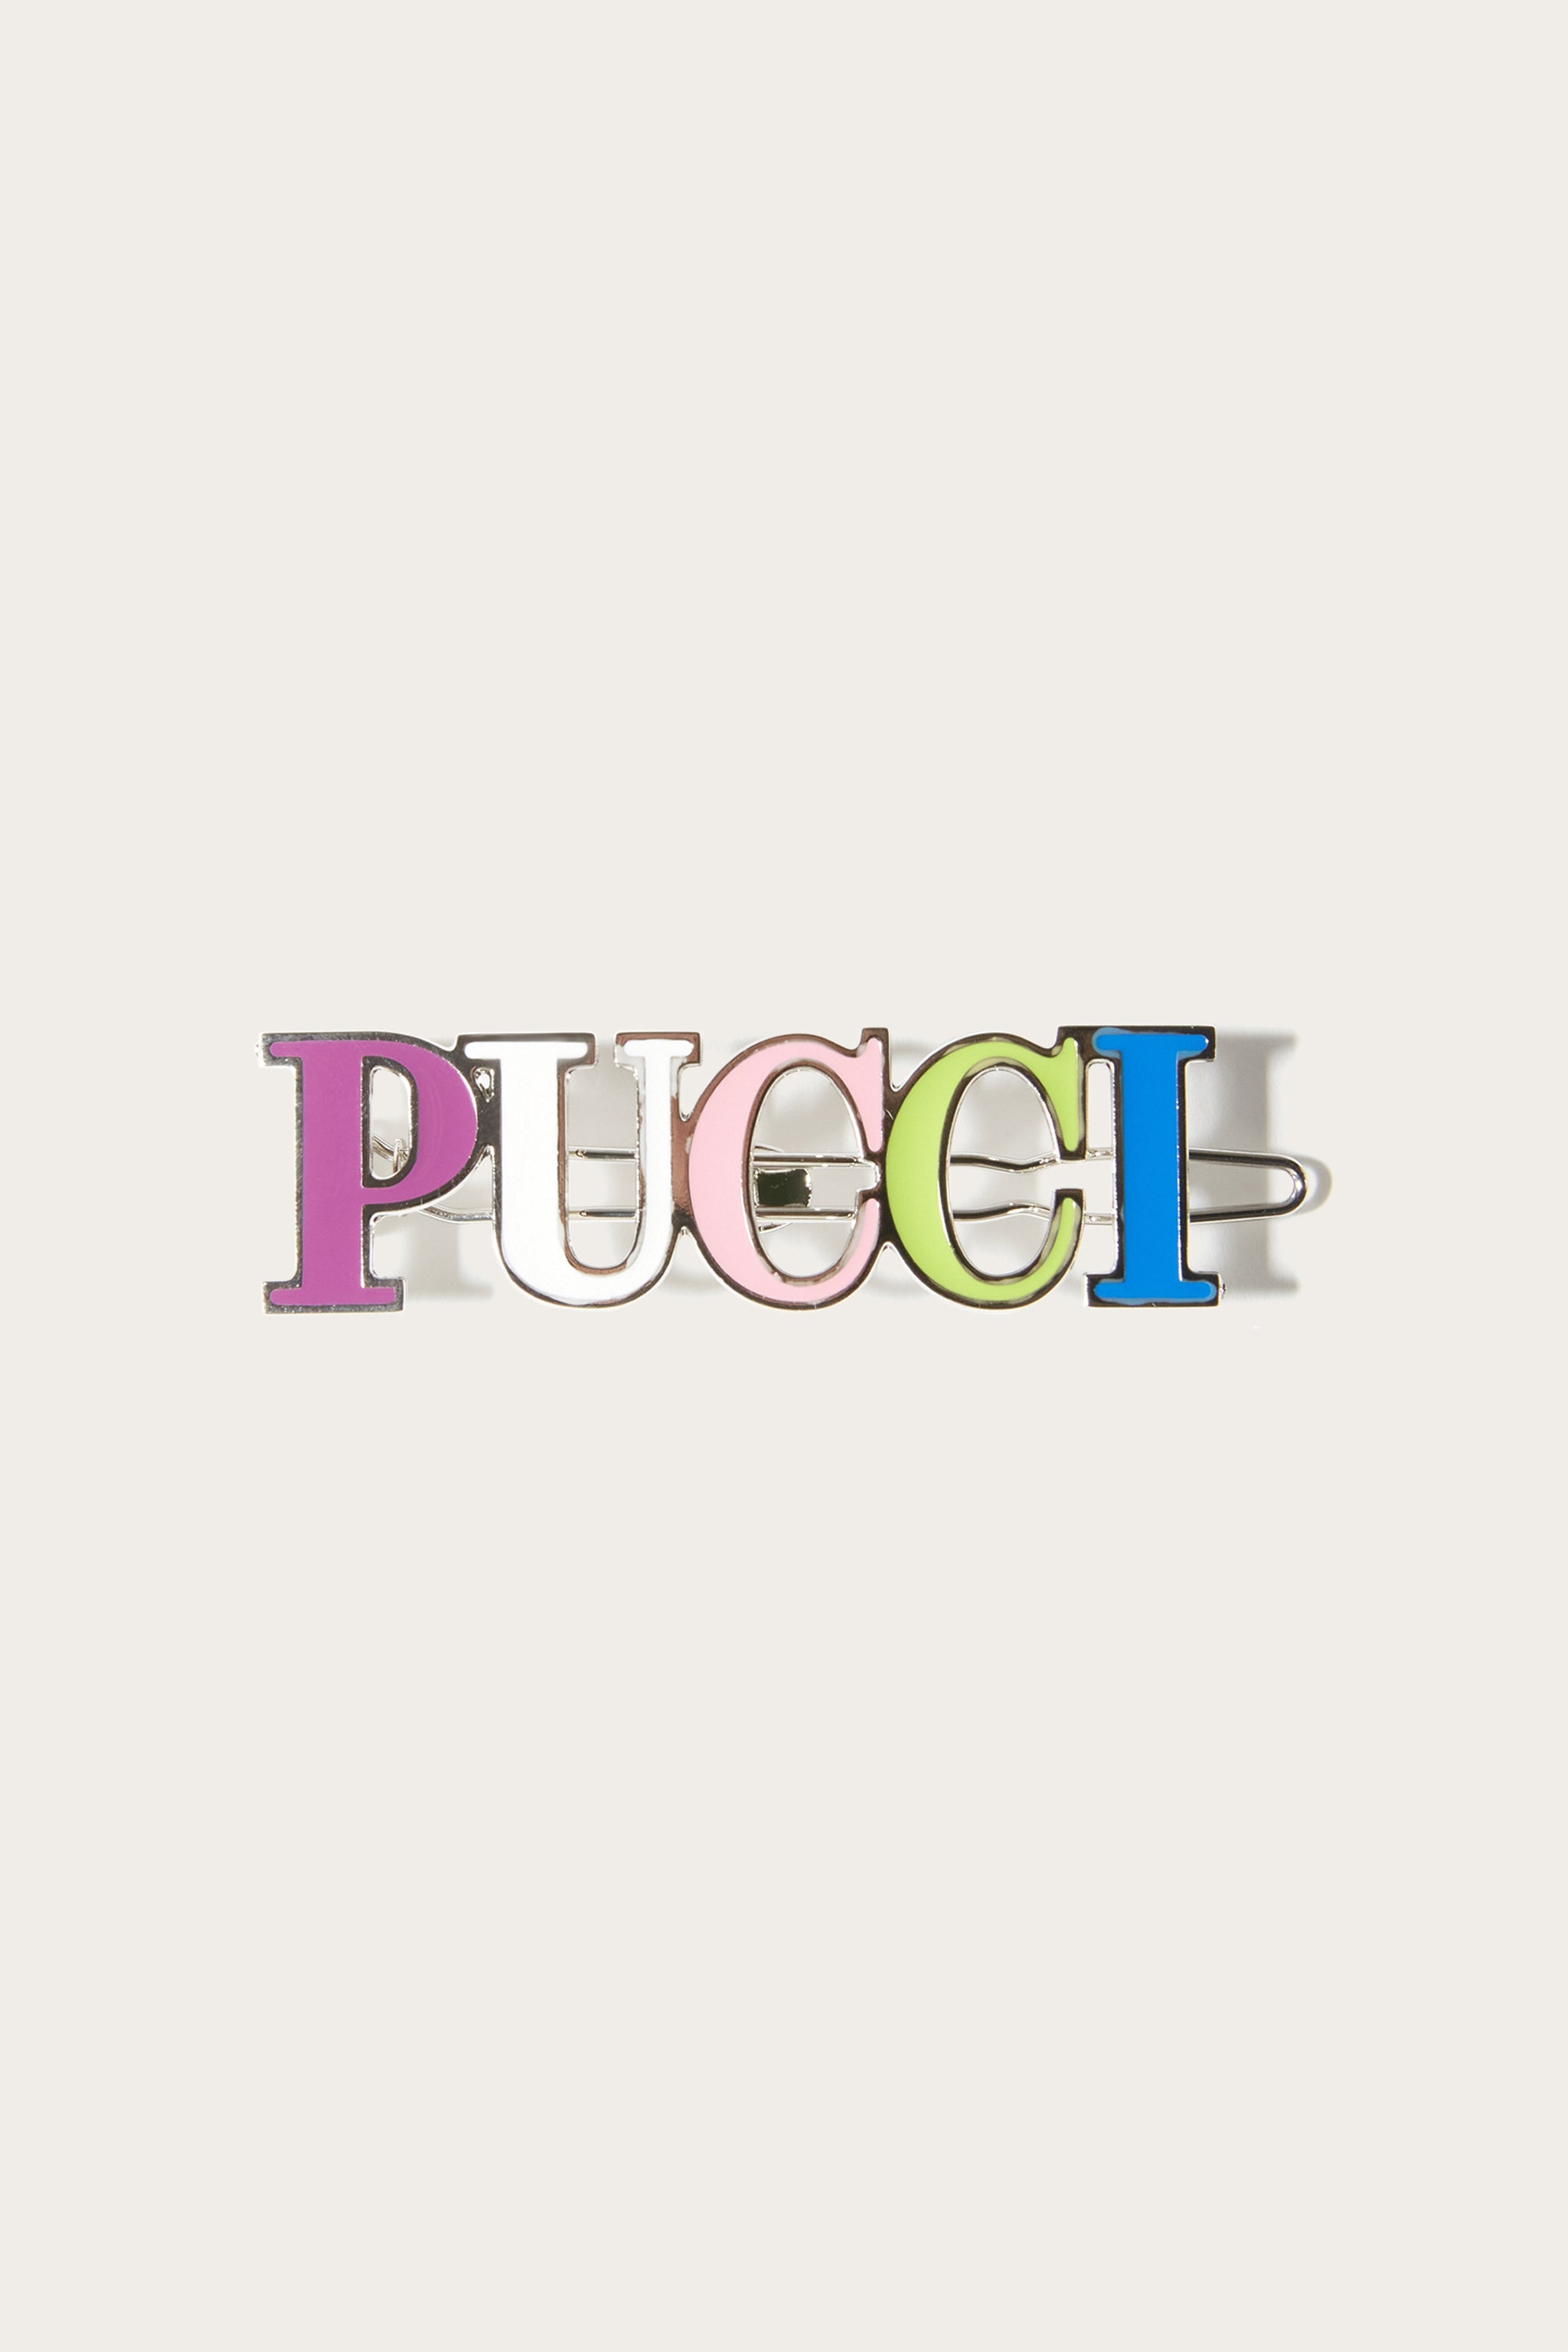 PUCCI Junior rubberized-logo sweatshirt - White